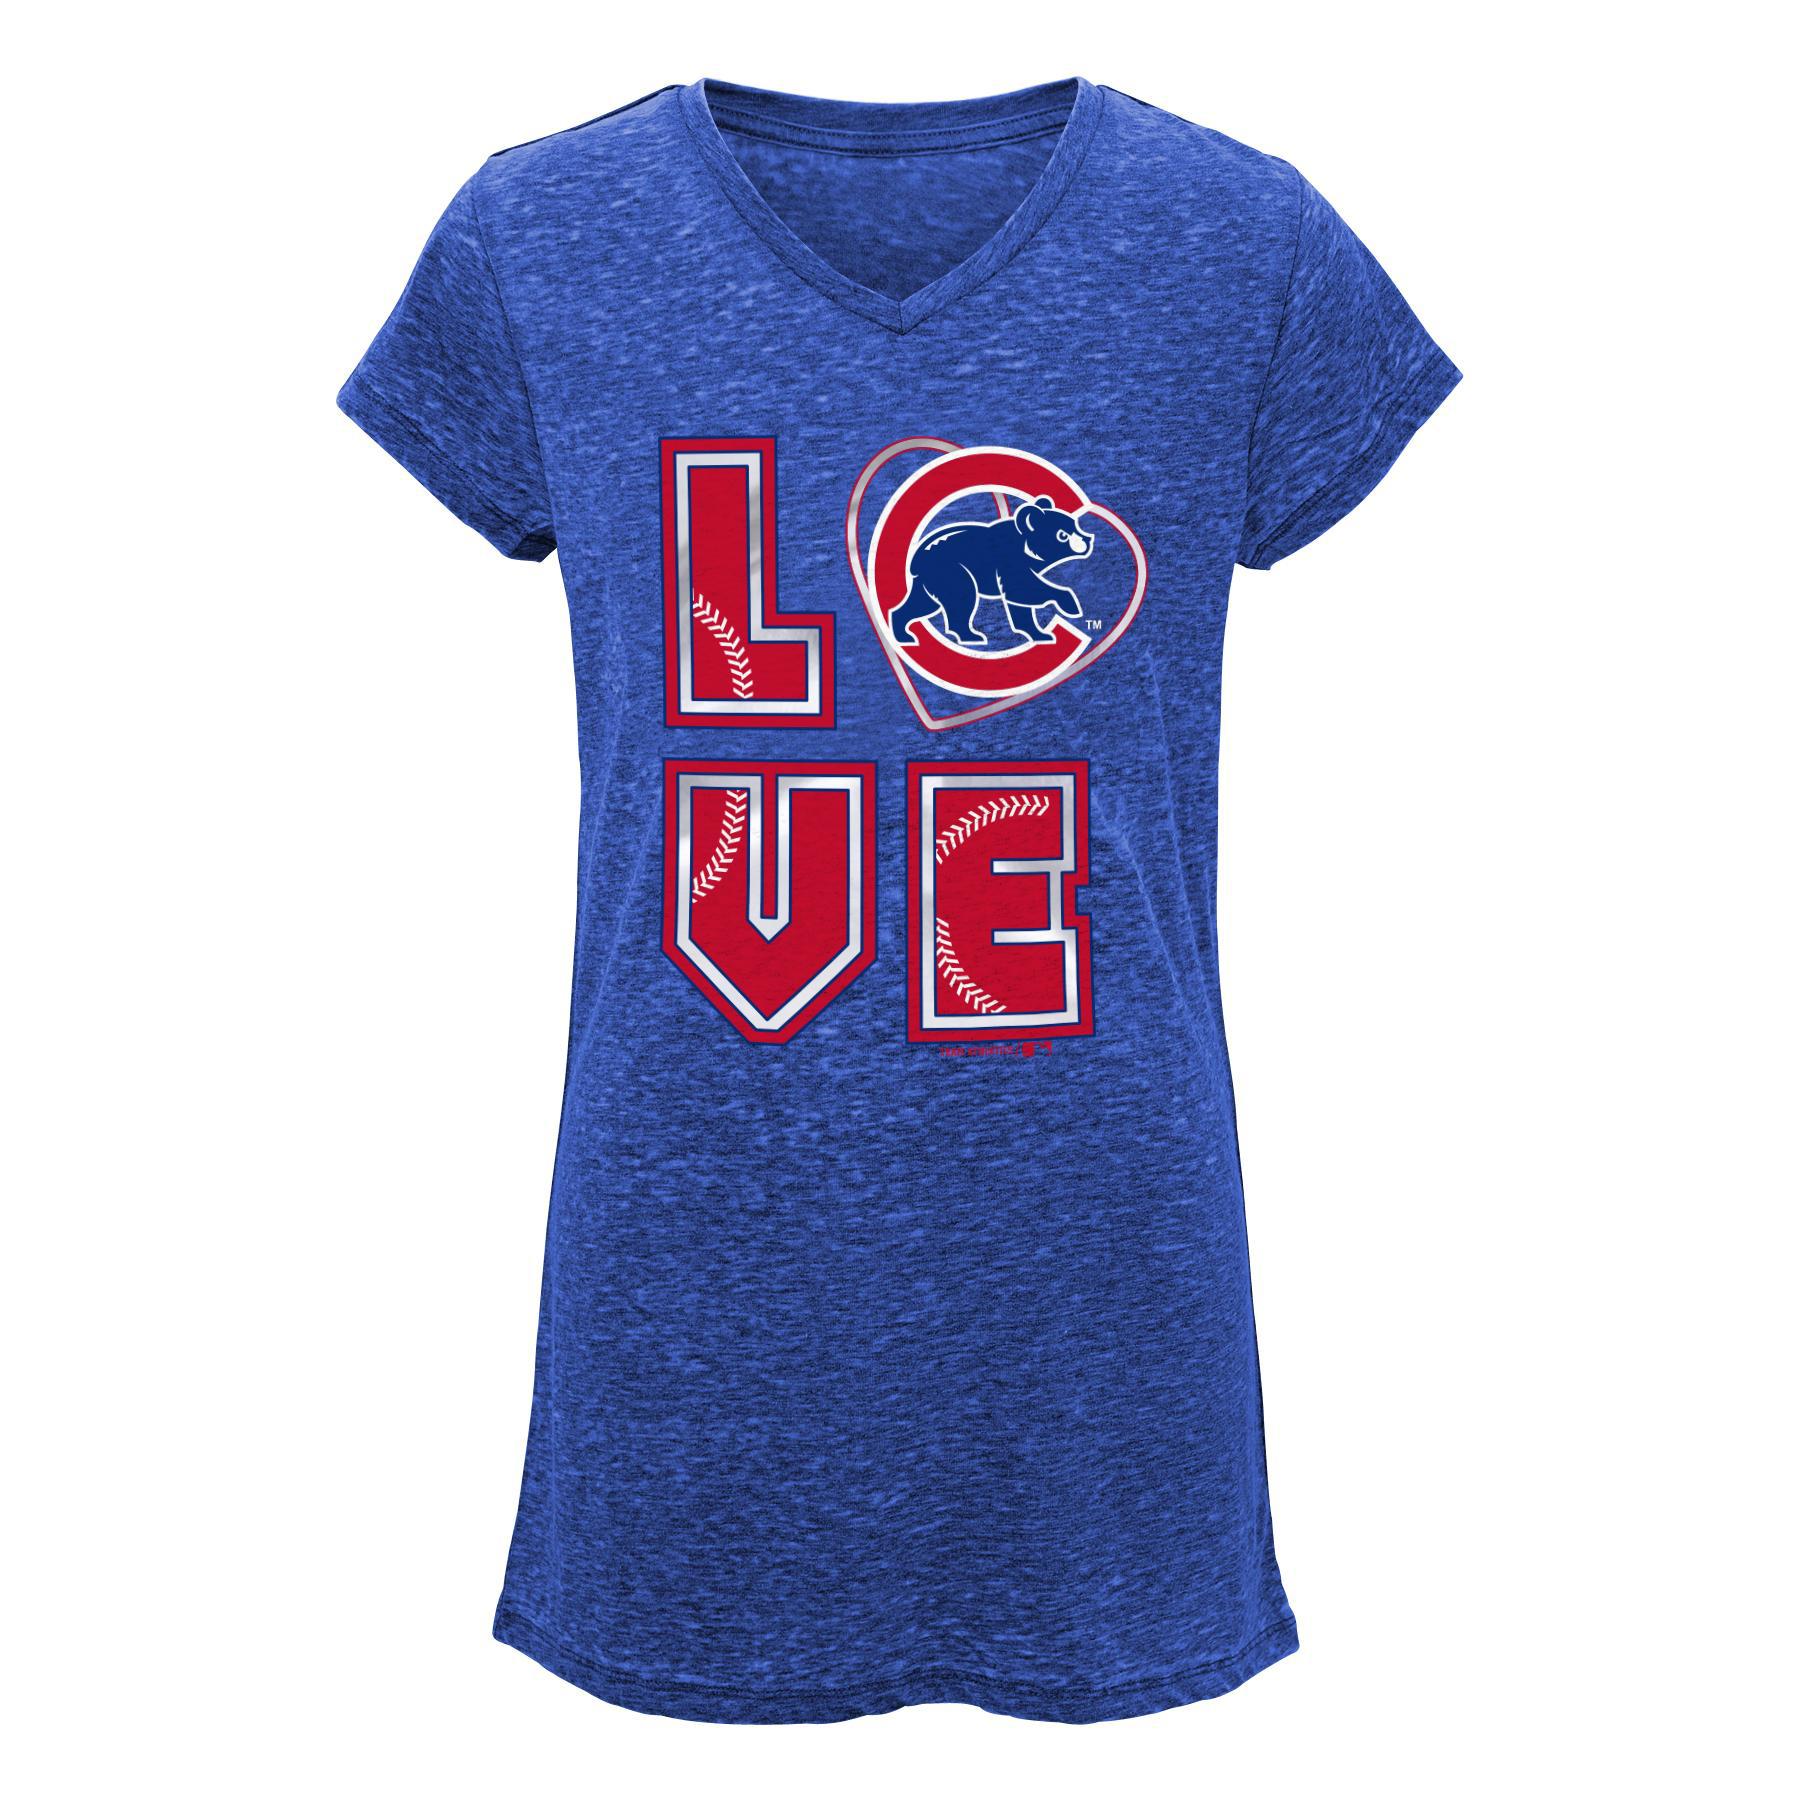 MLB Girls' Burnout T-Shirt - Chicago Cubs